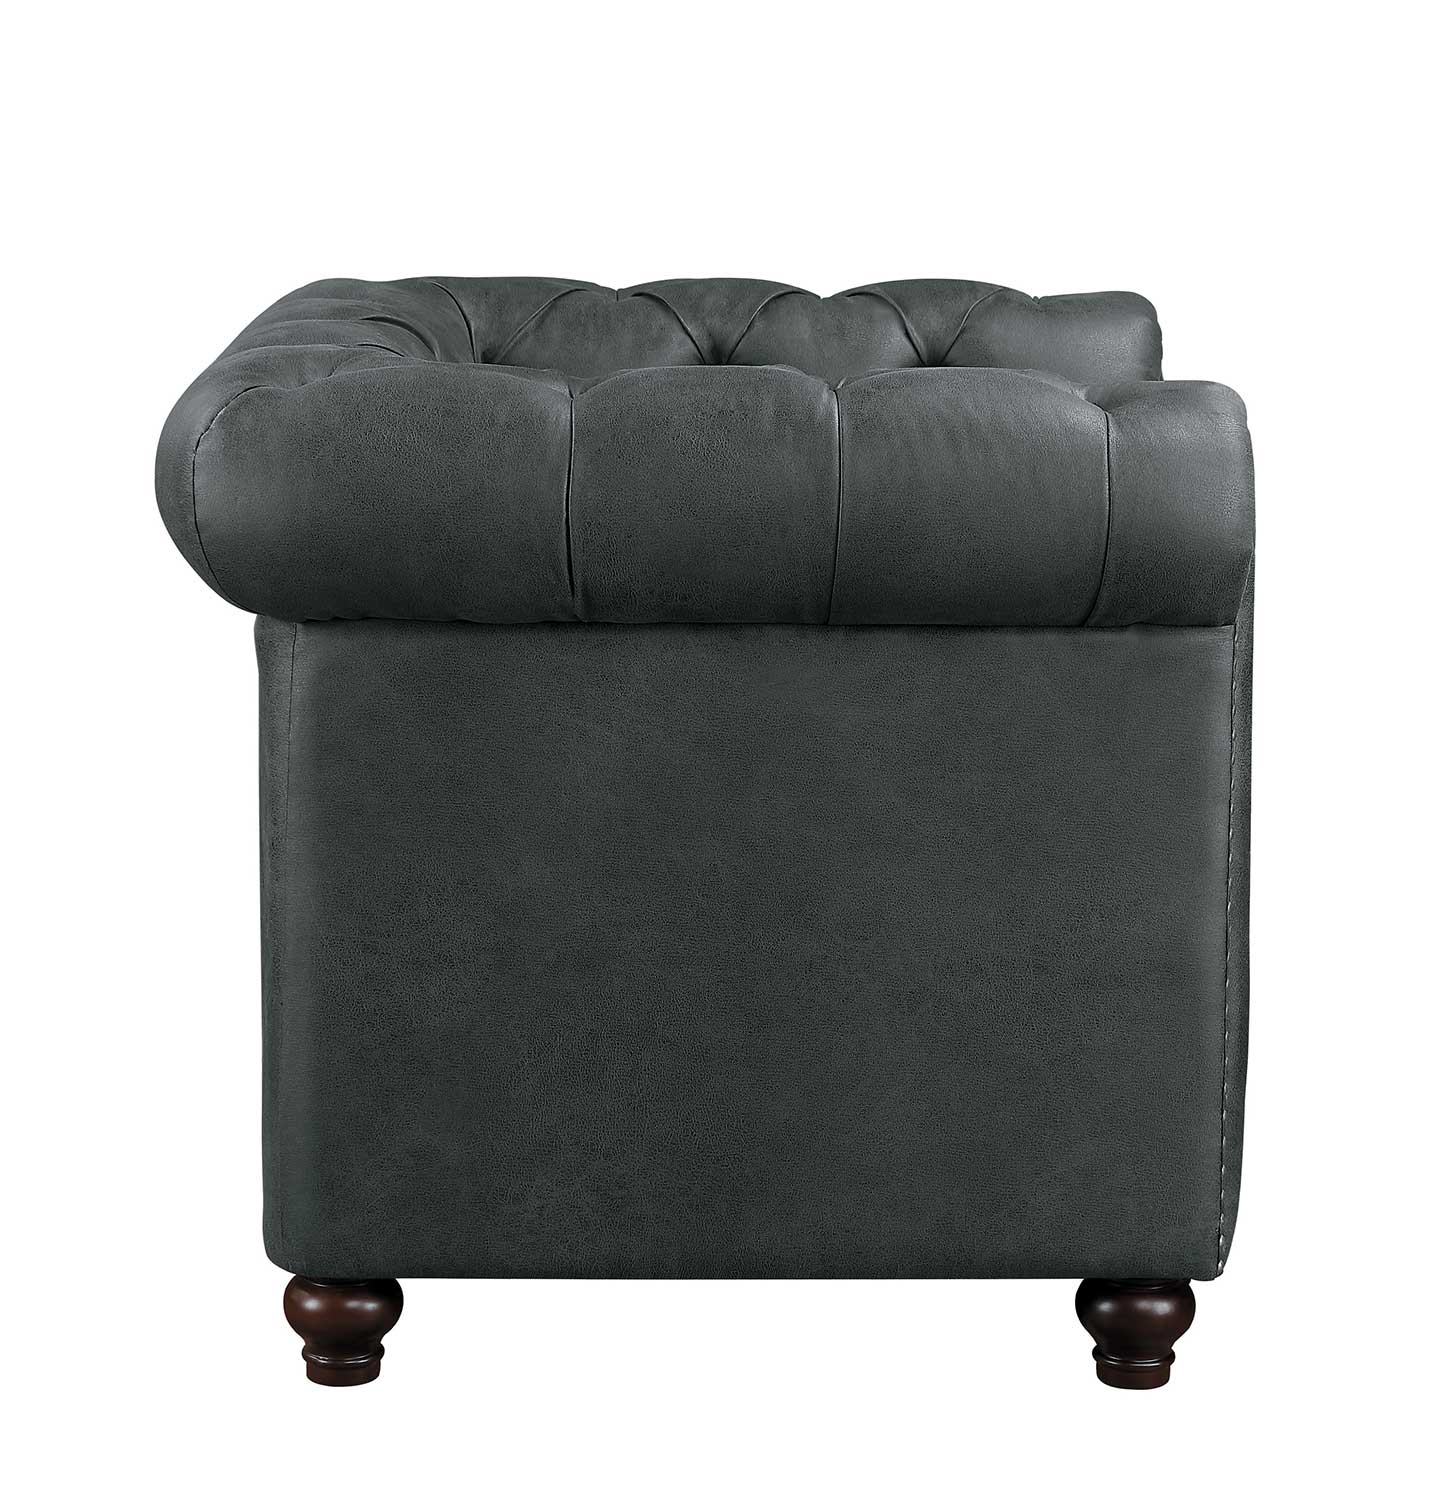 Homelegance Wallstone Chair - Gray